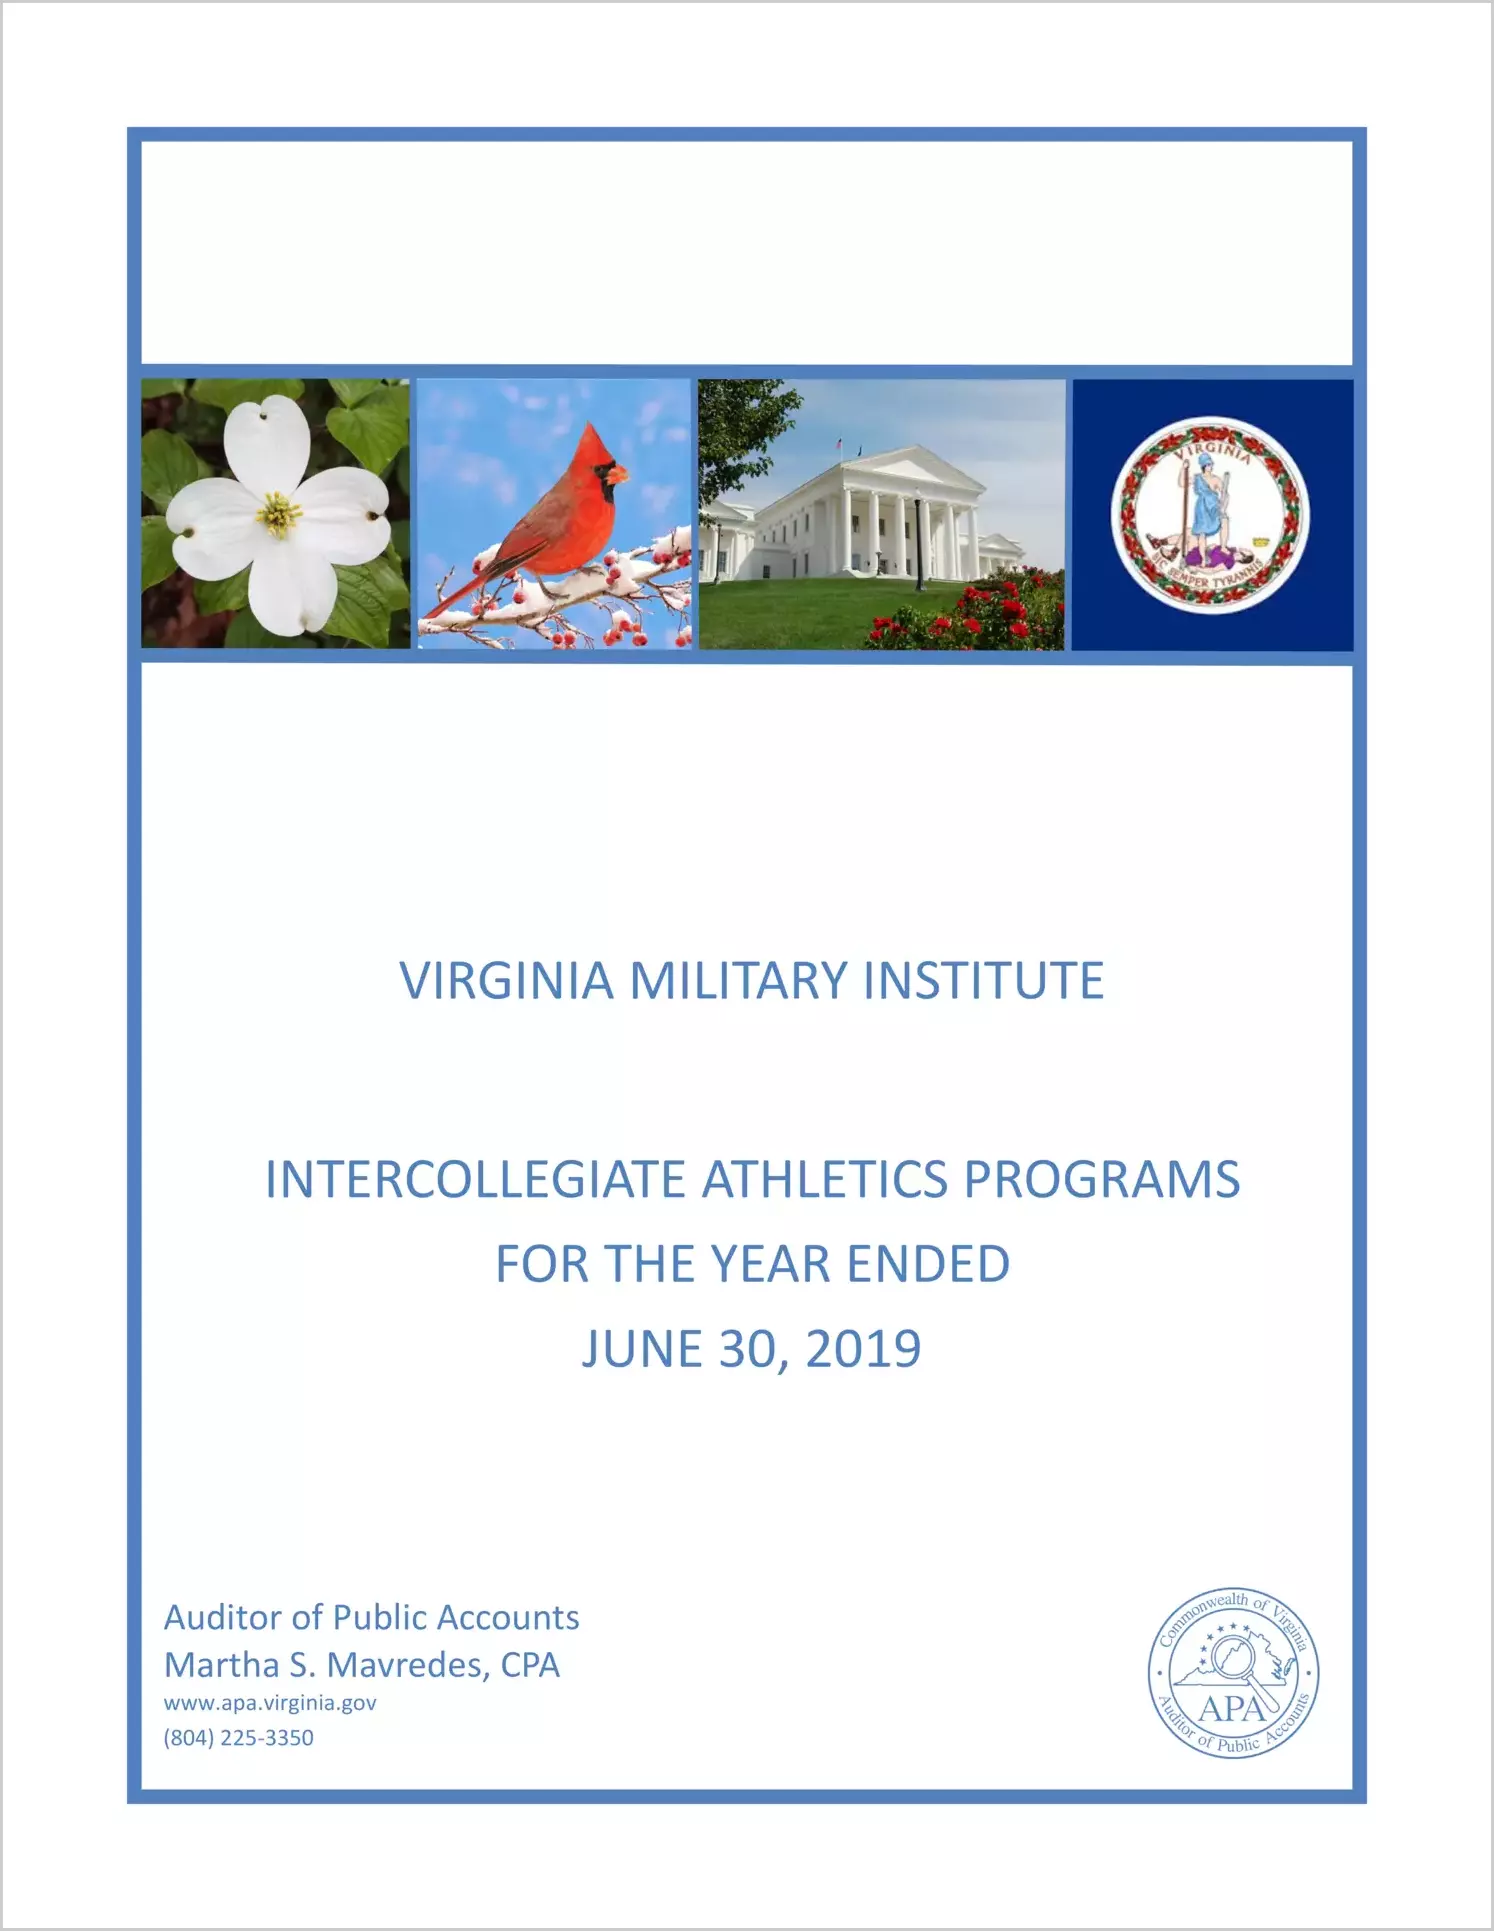 Virginia Military Institute Intercollegiate Athletics Programs for the year ended June 30, 2019